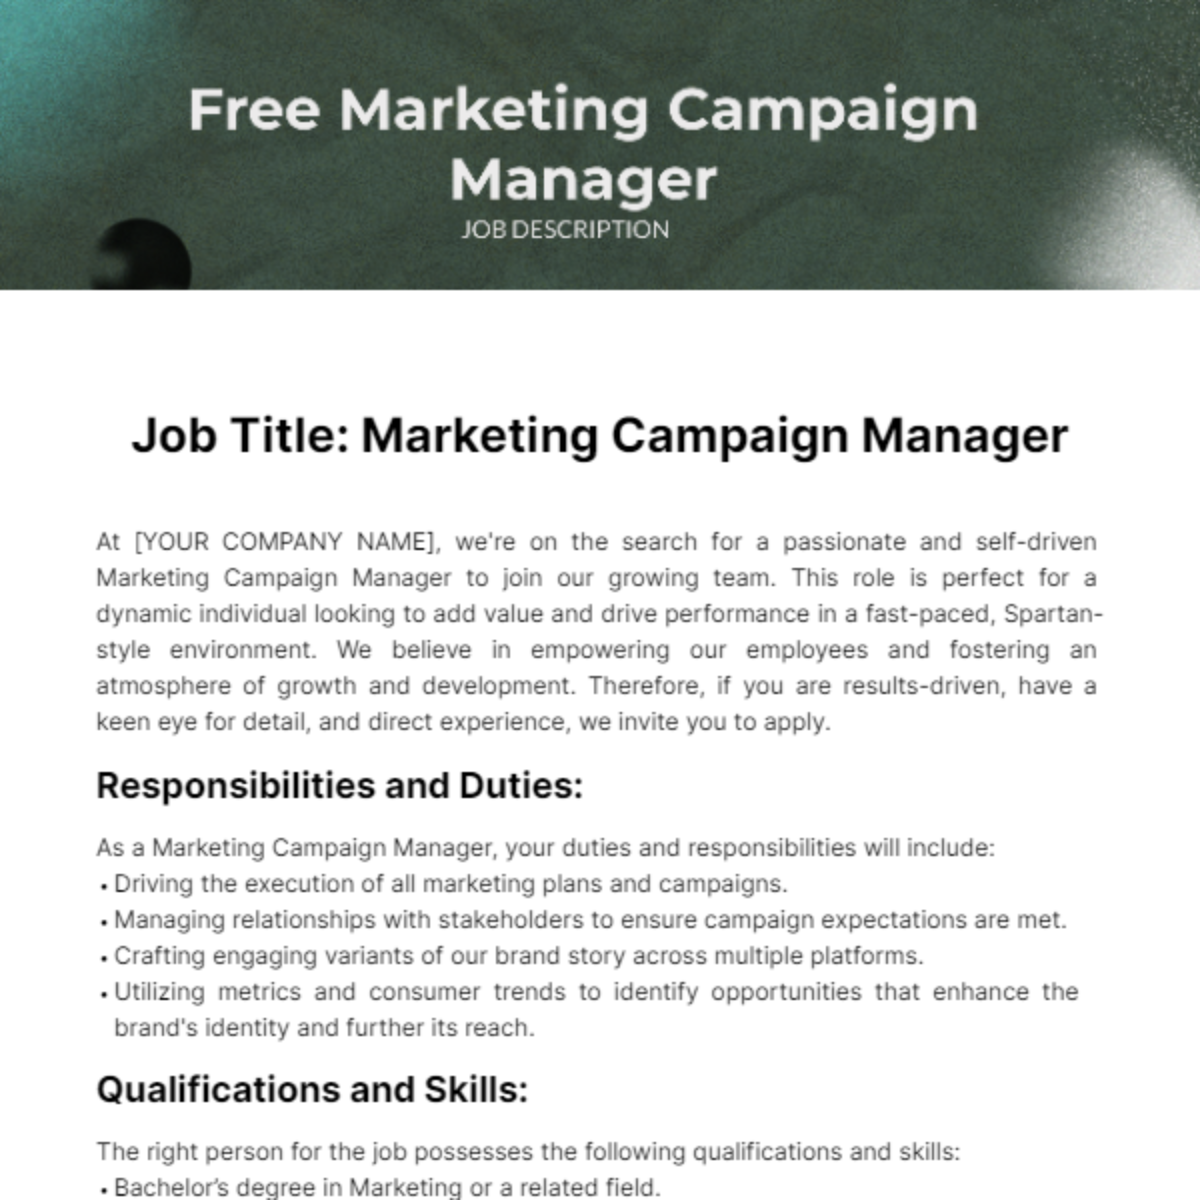 Free Marketing Campaign Manager Job Description Template